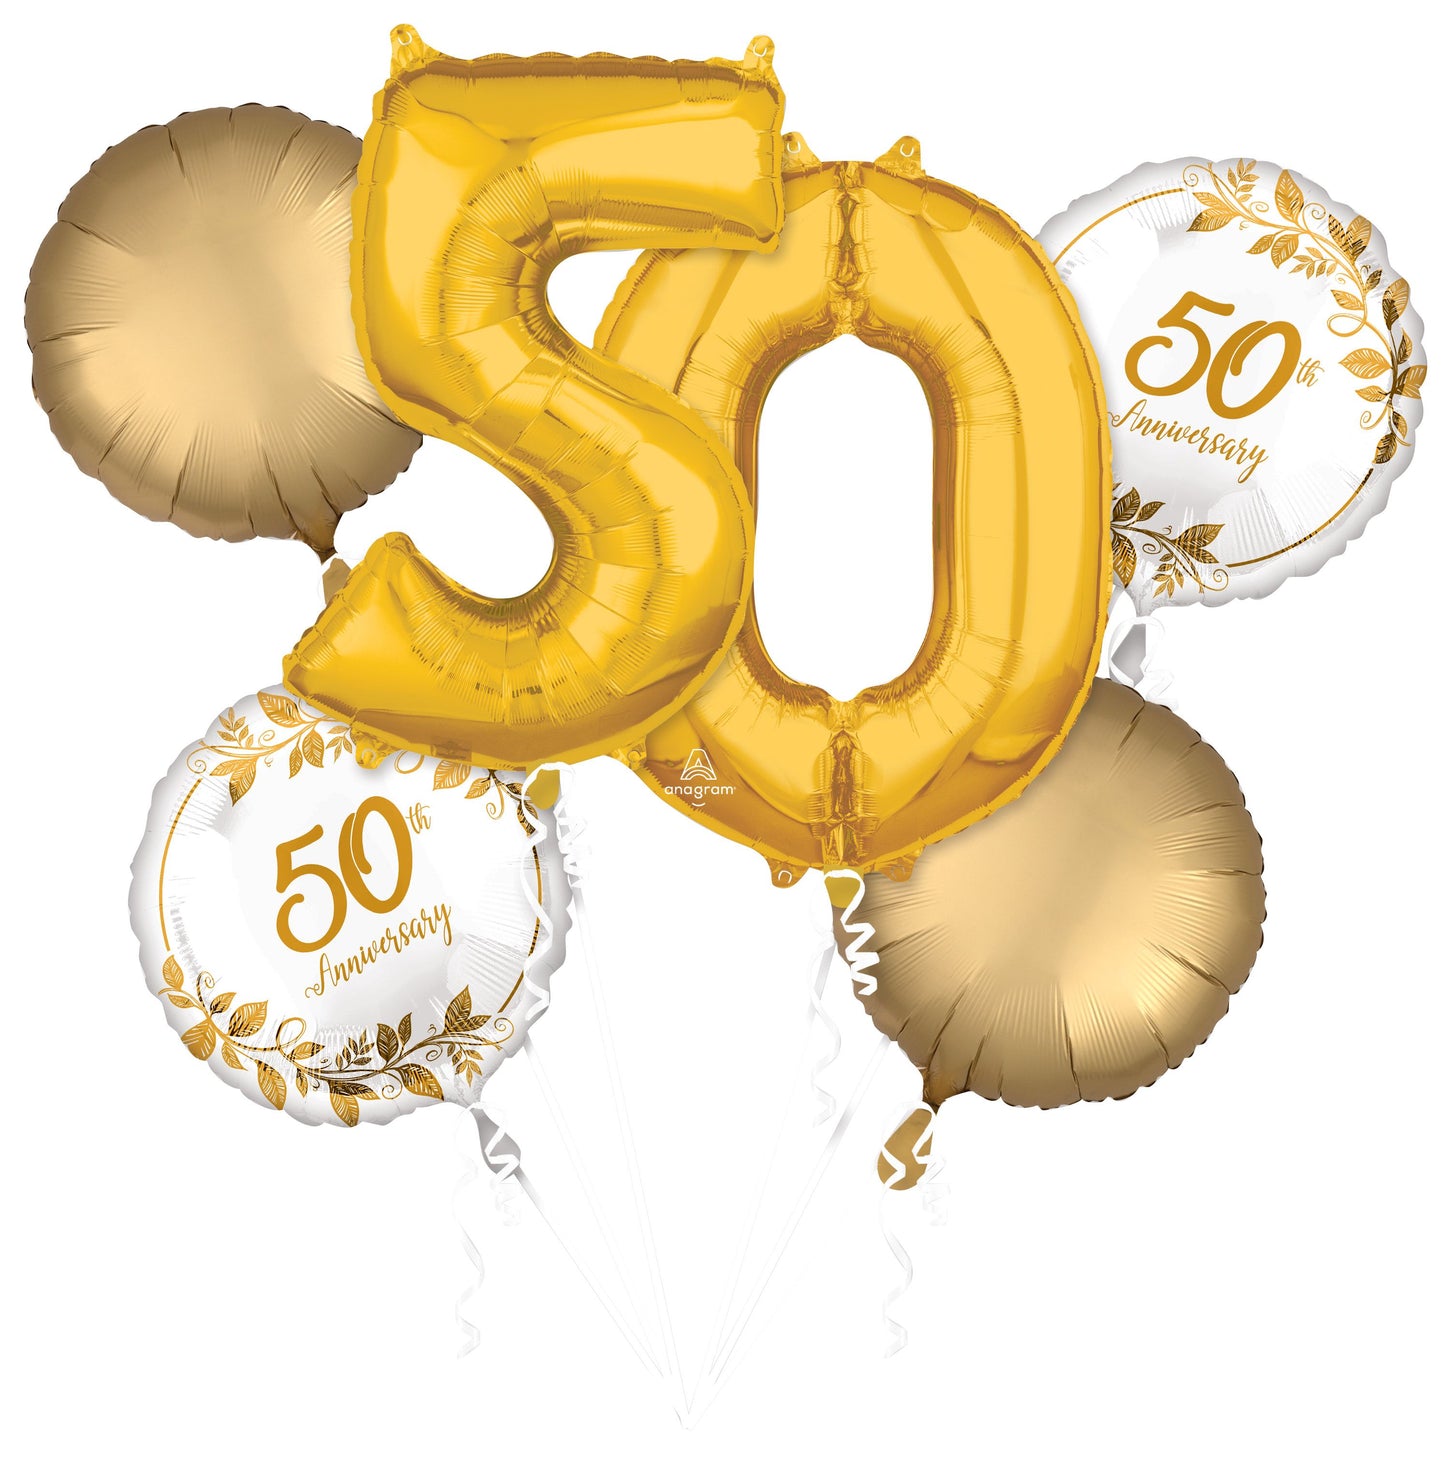 Super Bouquet Wedding 50th Anniversary - Gold